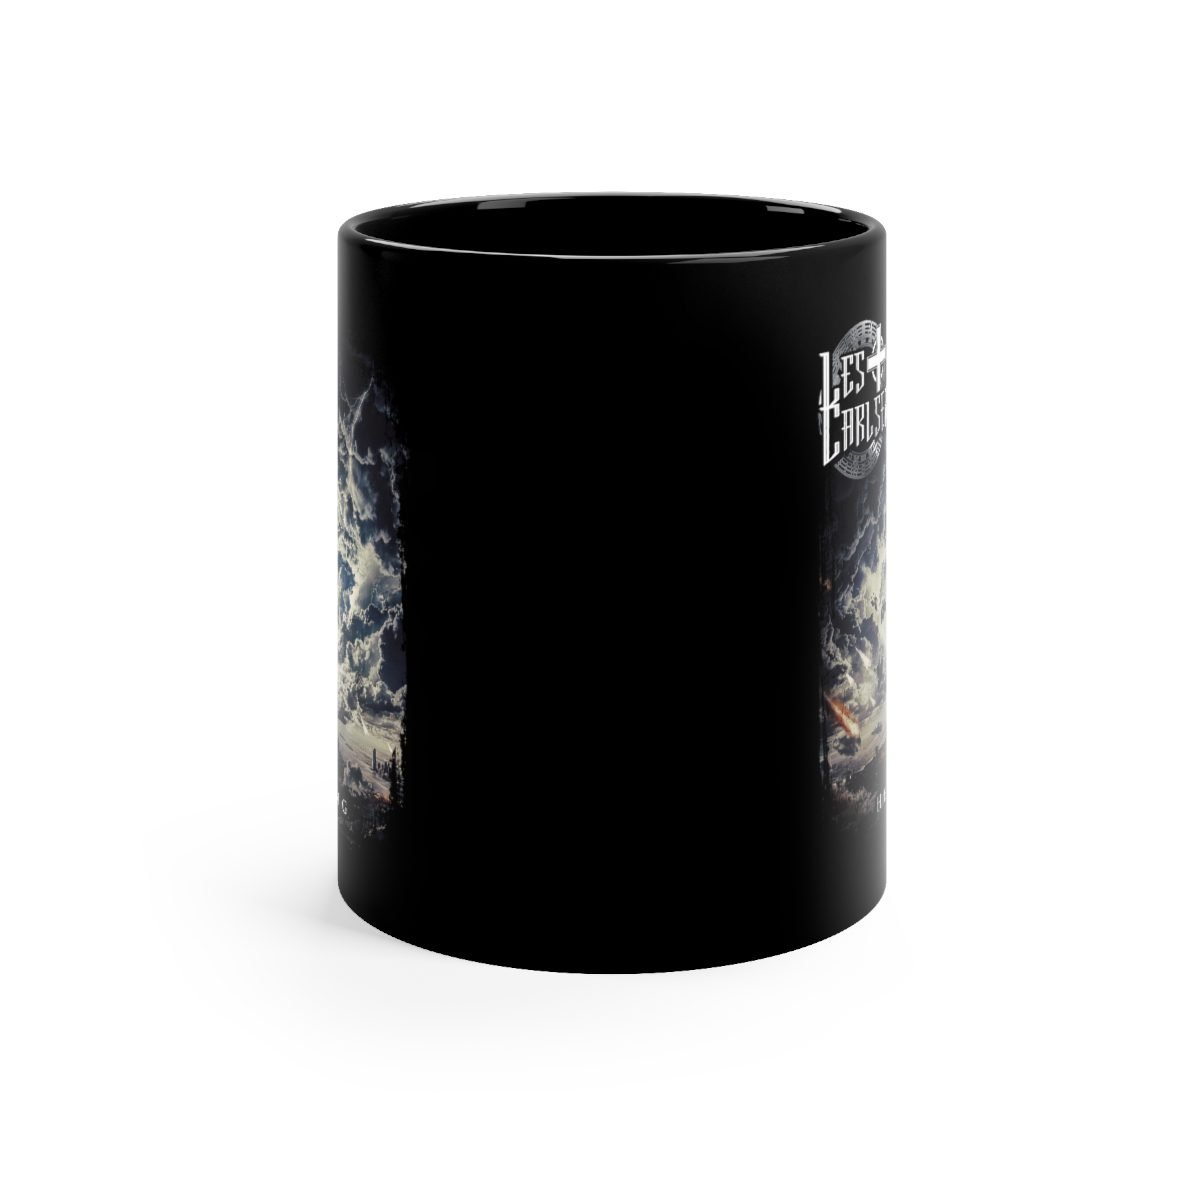 Les Carlsen – He’s Coming 11oz Black mug